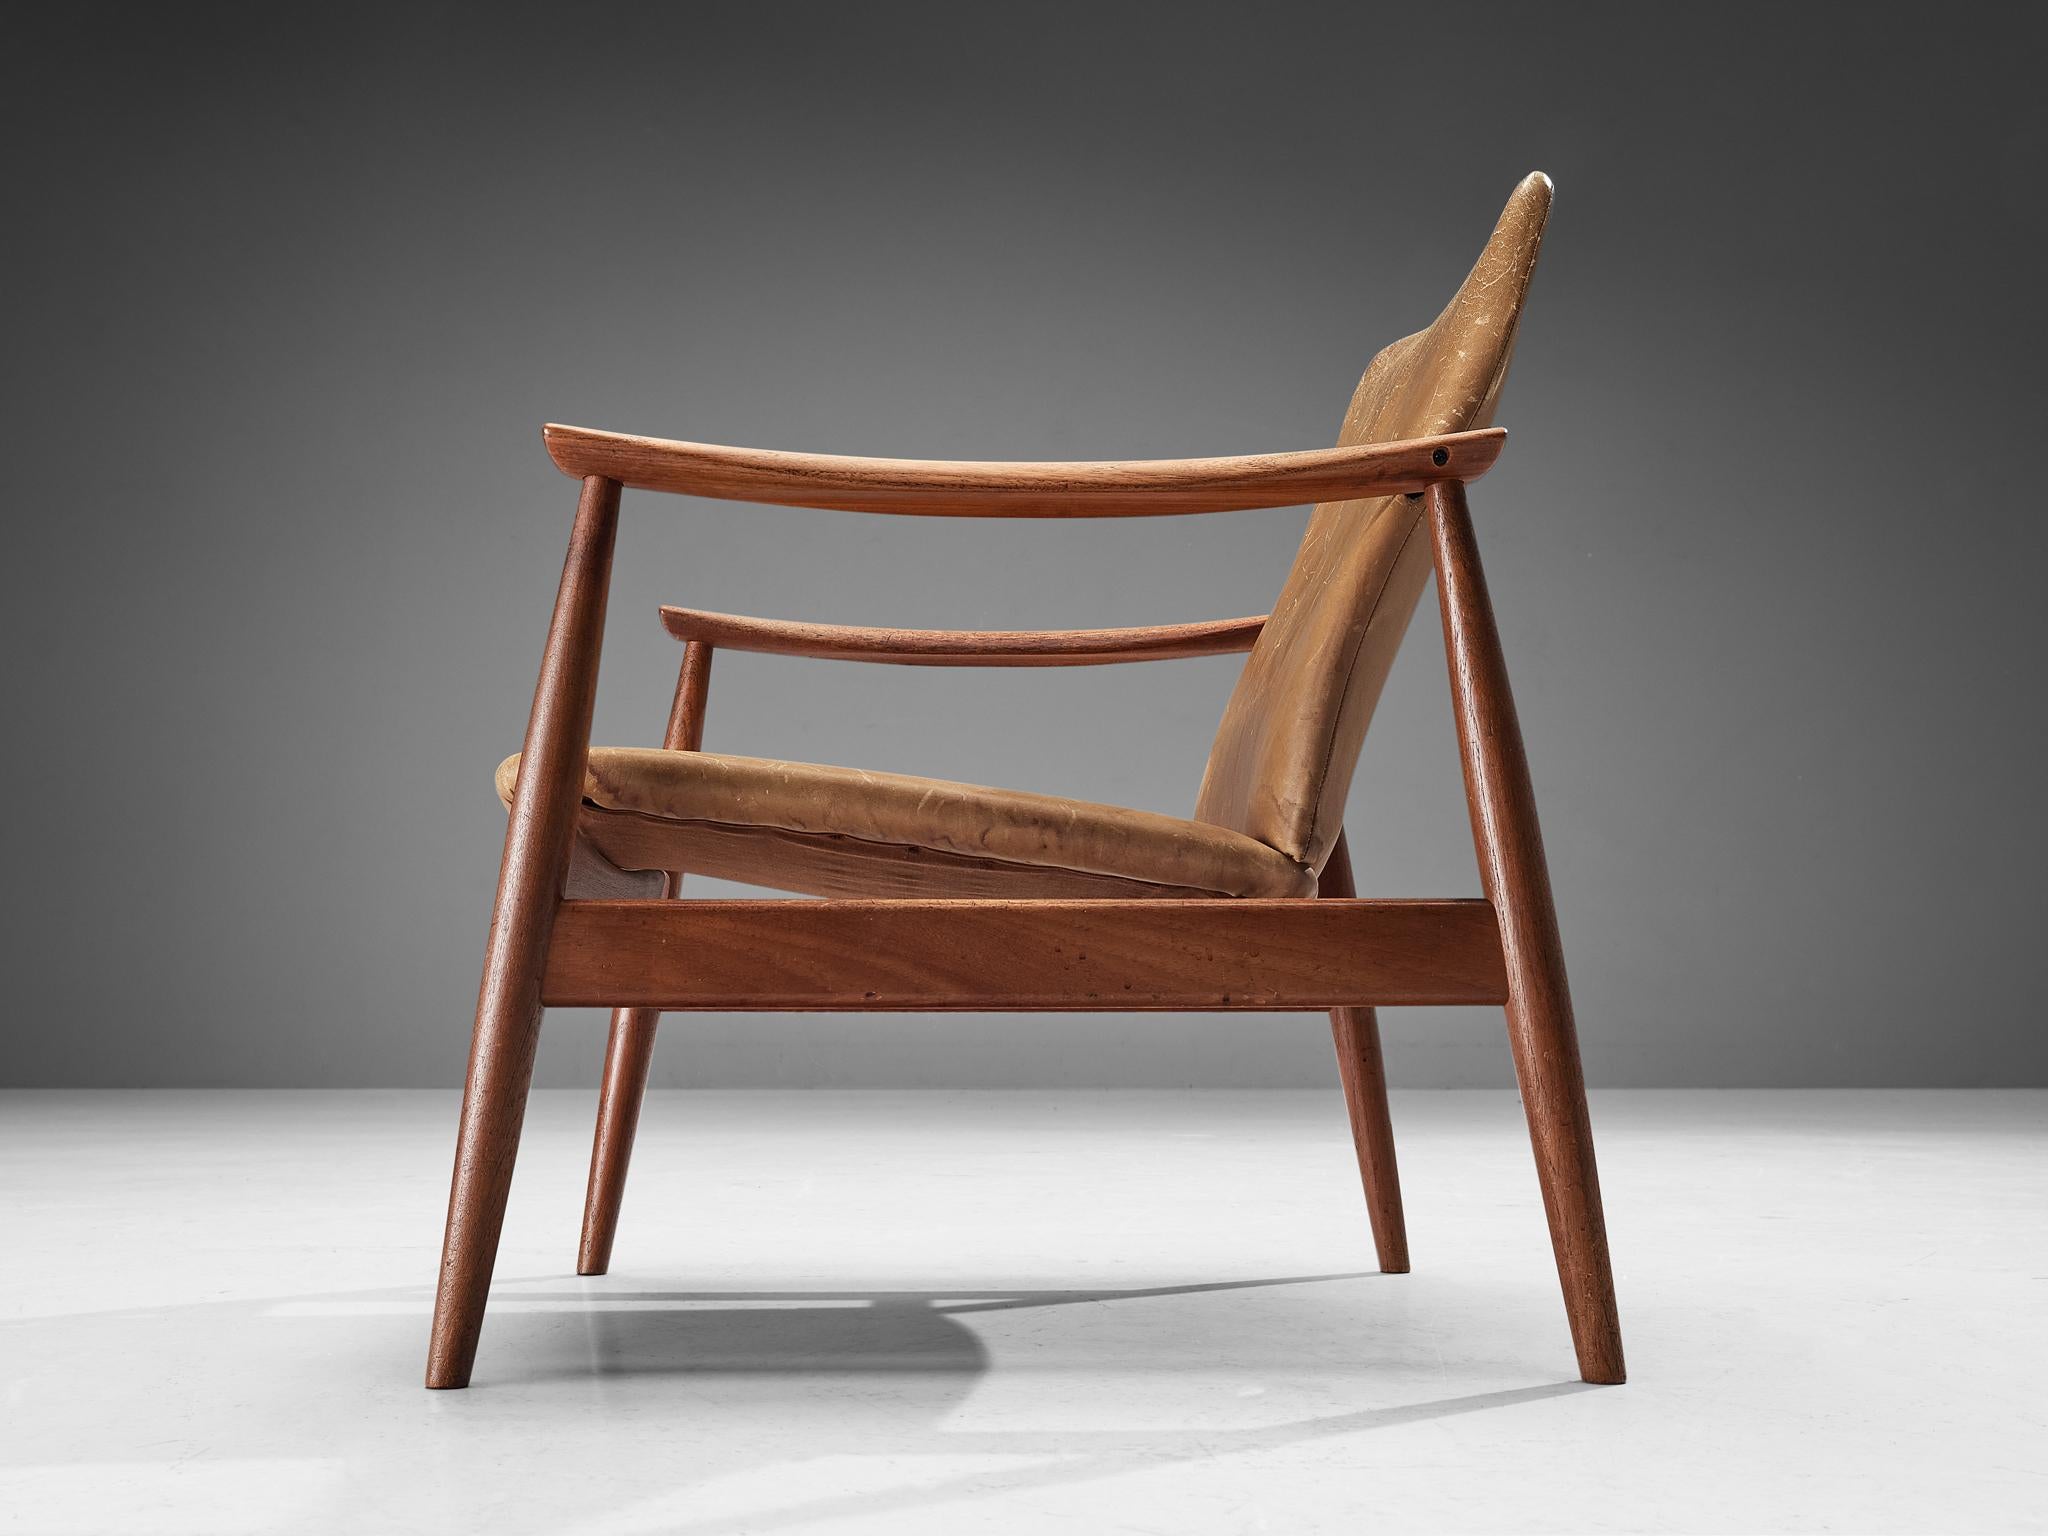 Scandinavian Modern Finn Juhl for France & Søn Lounge Chair in Teak and Leather